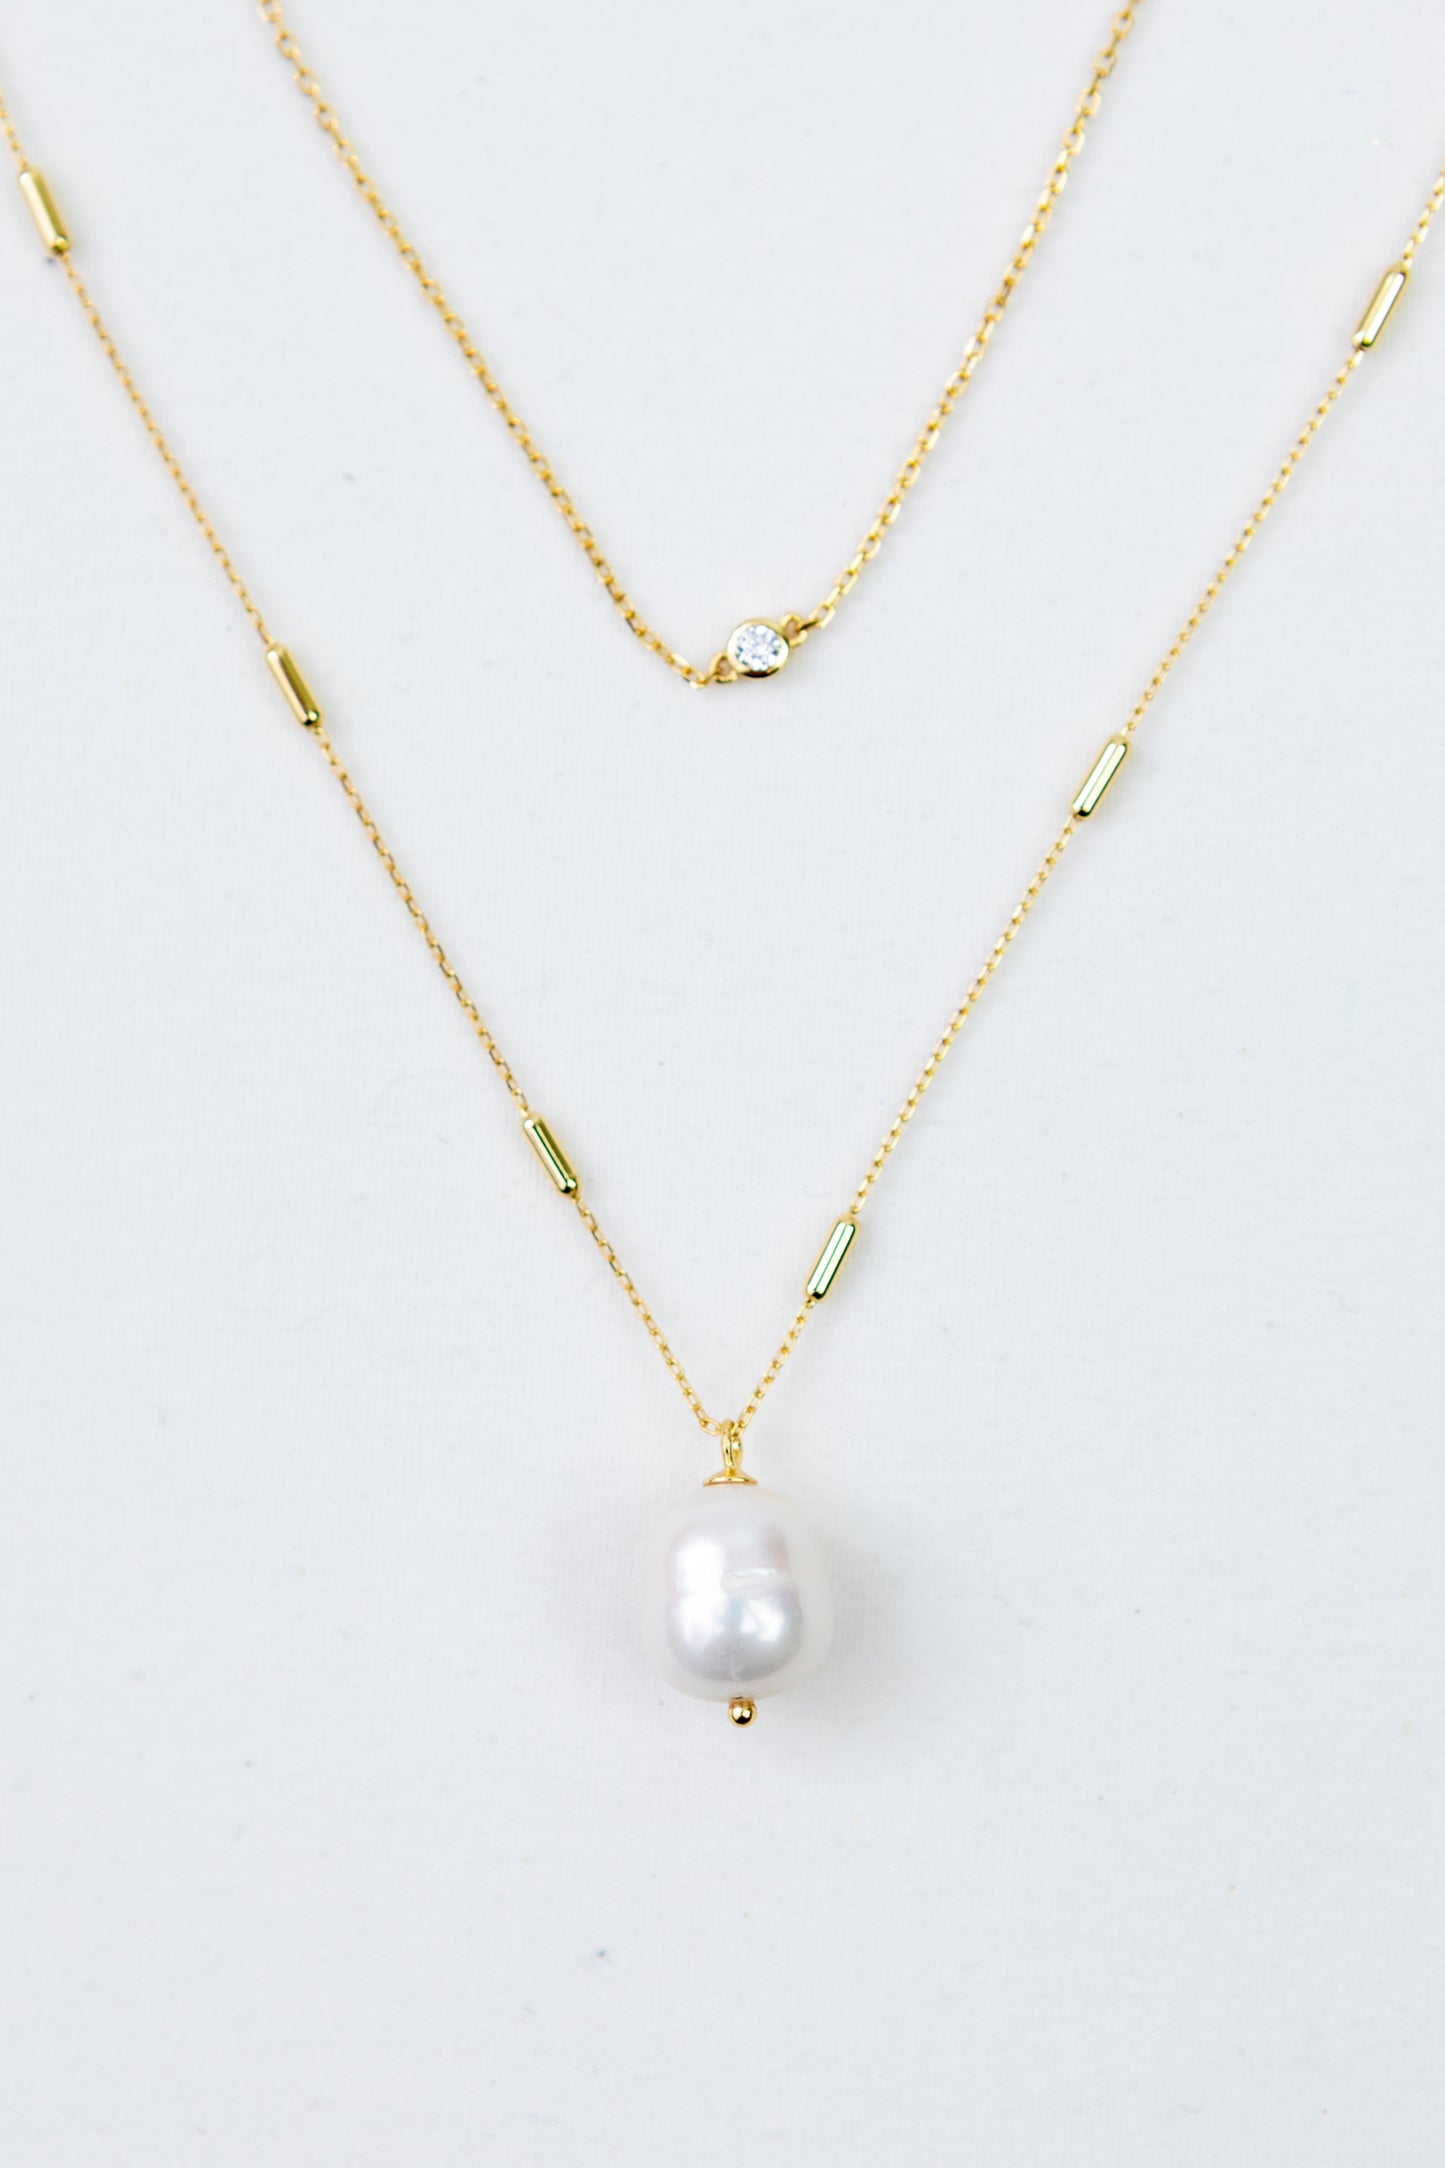 Eleanor Pearl necklace